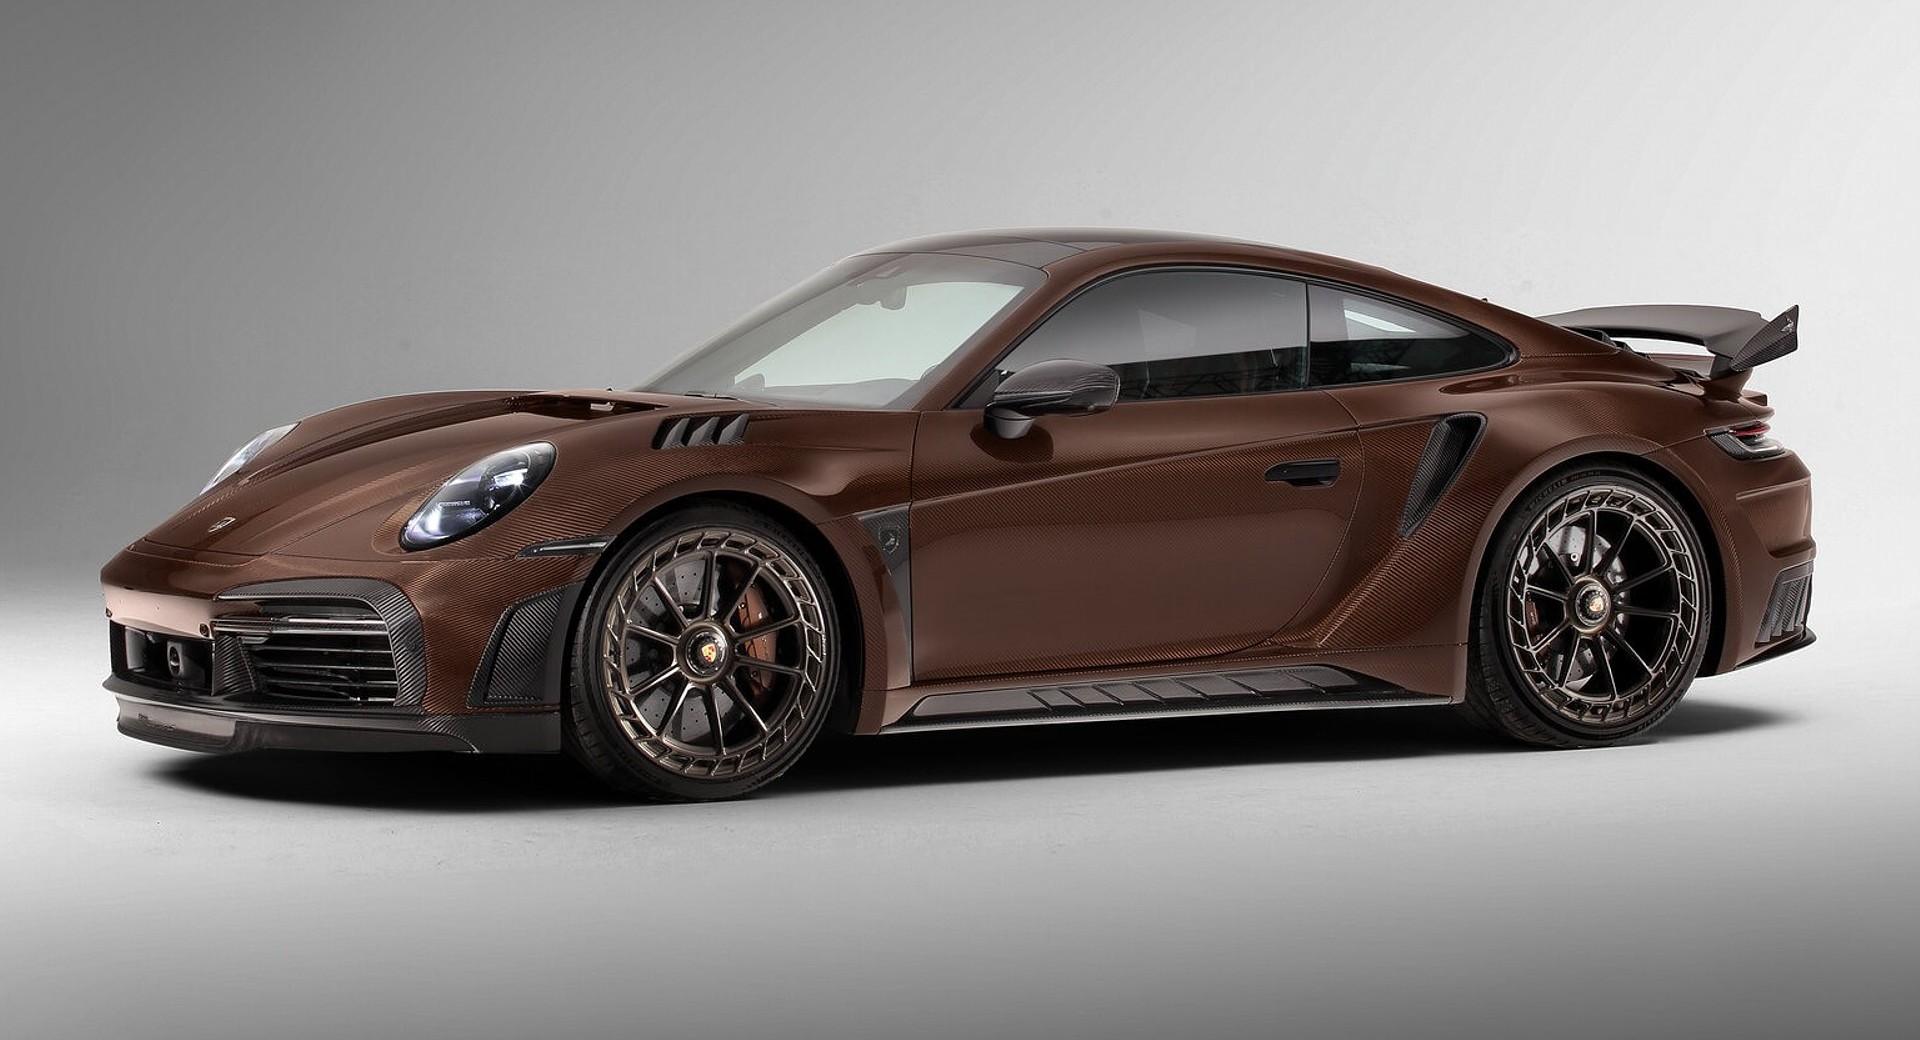 https://www.carscoops.com/wp-content/uploads/2022/01/Topcar-Porsche-992-Stinger-GTR-Limited-Carbon-Edition-brown-main.jpg